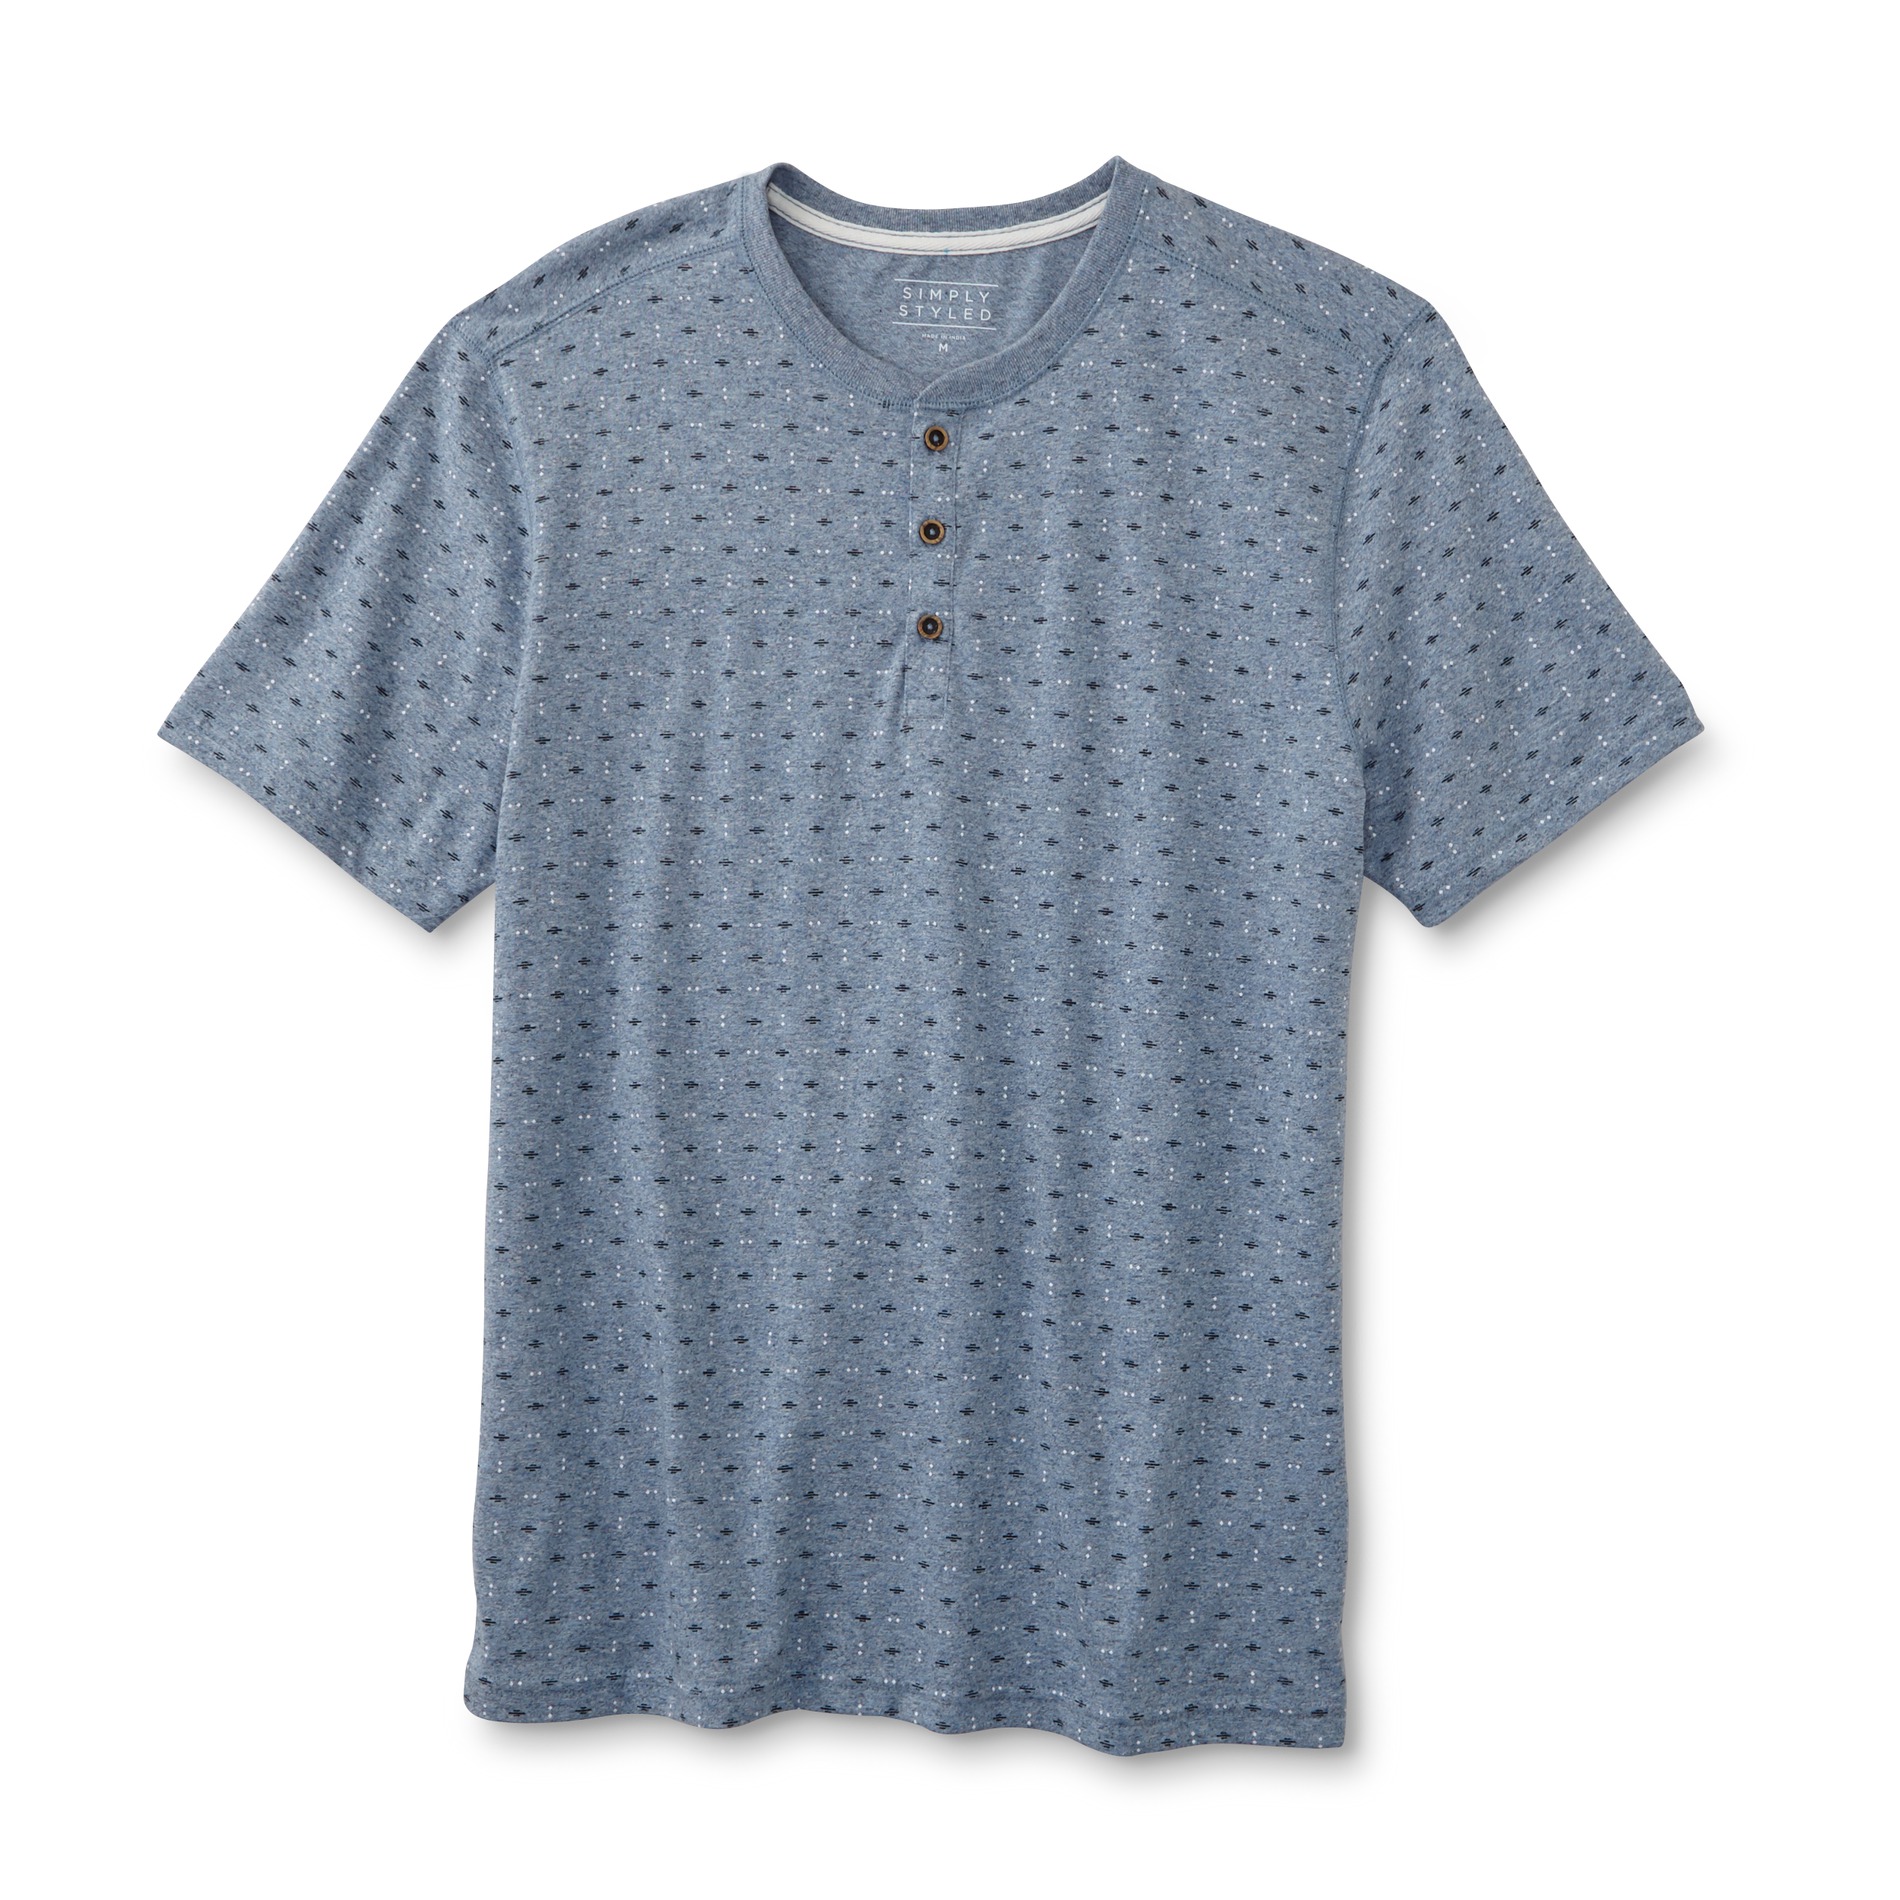 Simply Styled Men's Henley Shirt - Geometric